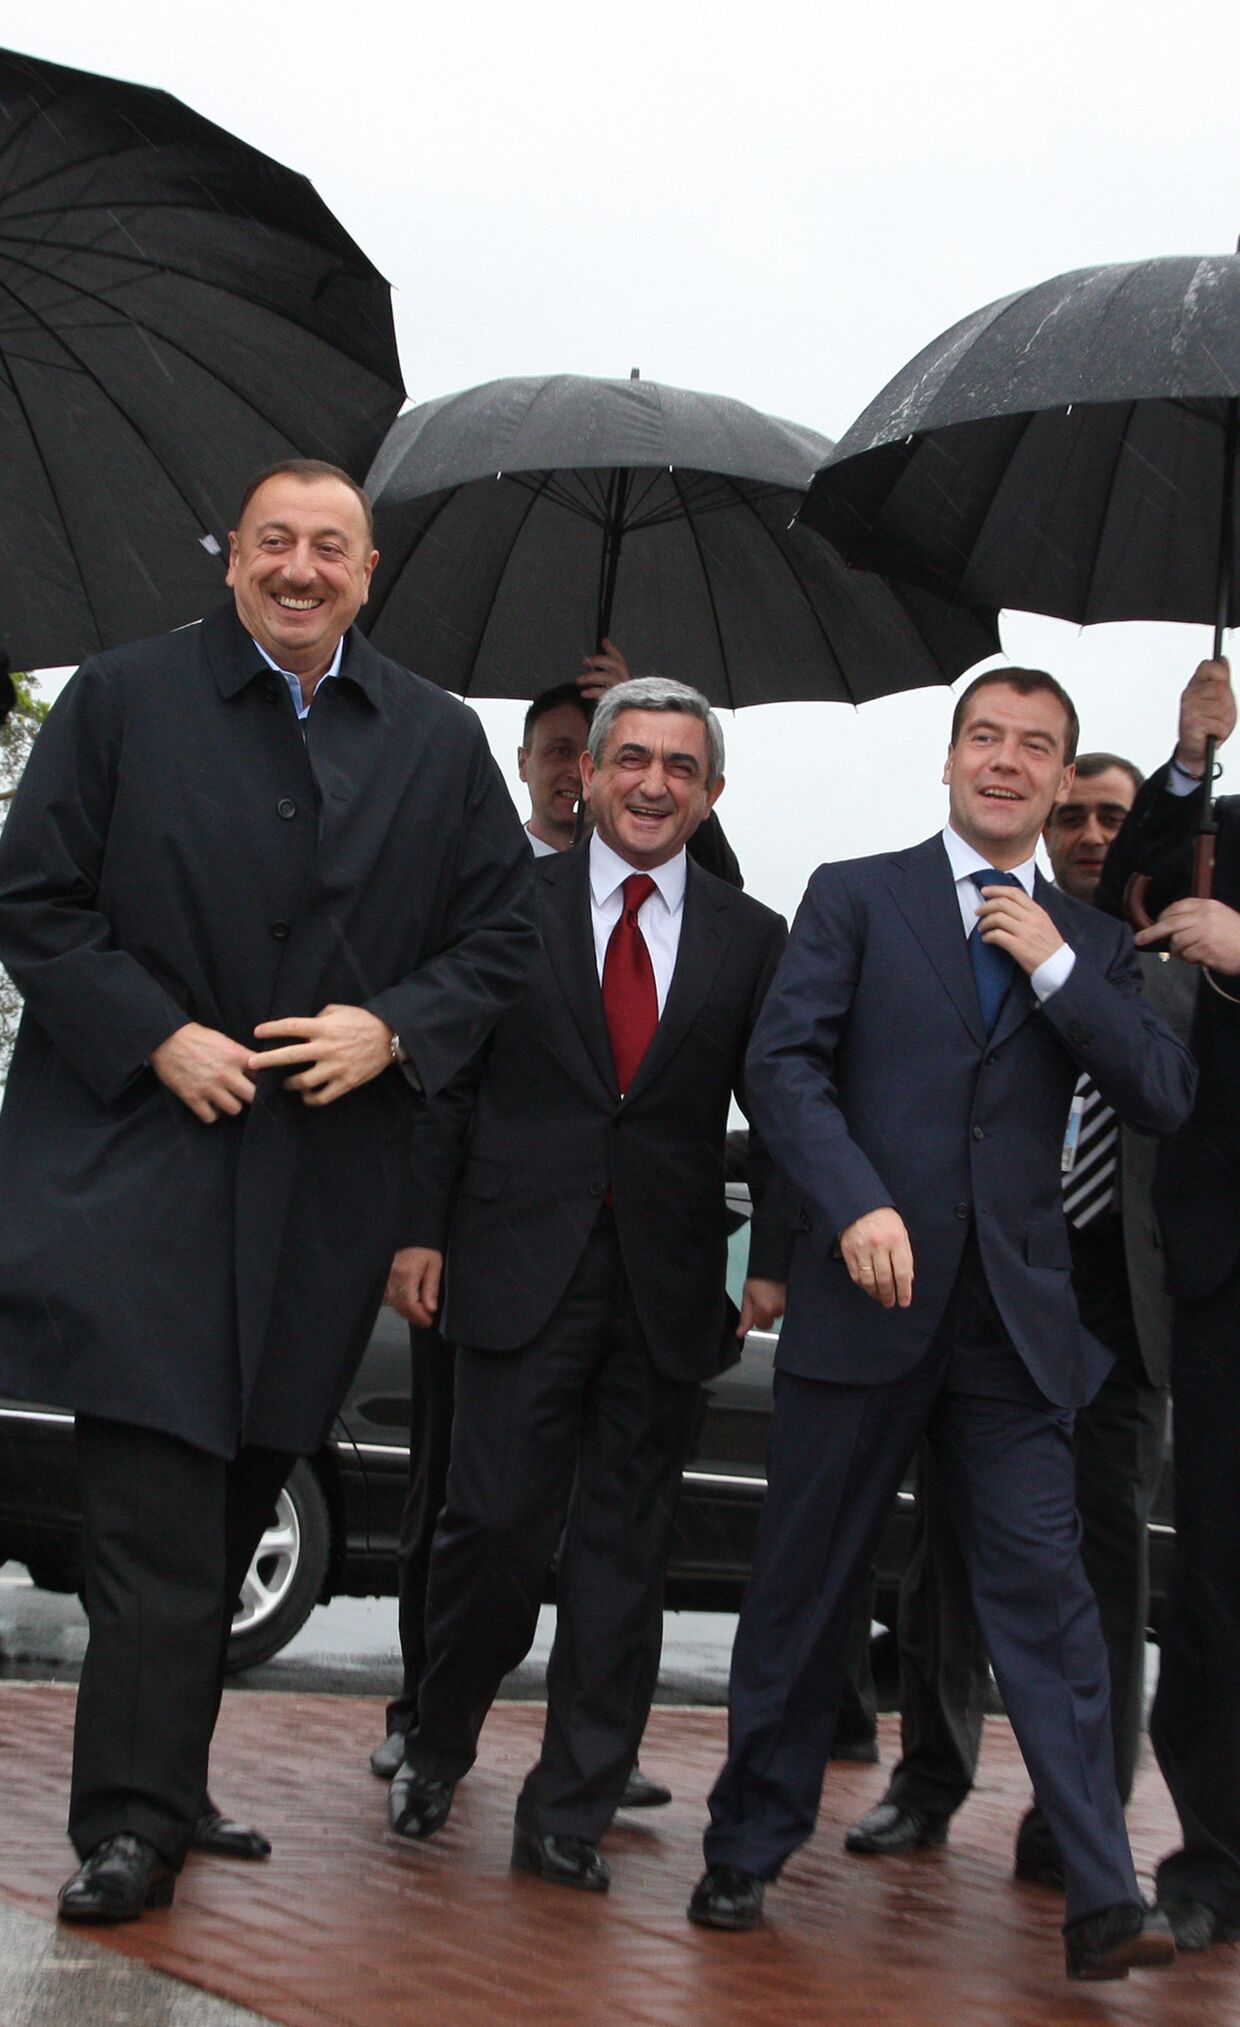 Президенты России, Армении и Азербайджана Дмитрий Медведев, Серж Саргсян и Ильхам Алиев